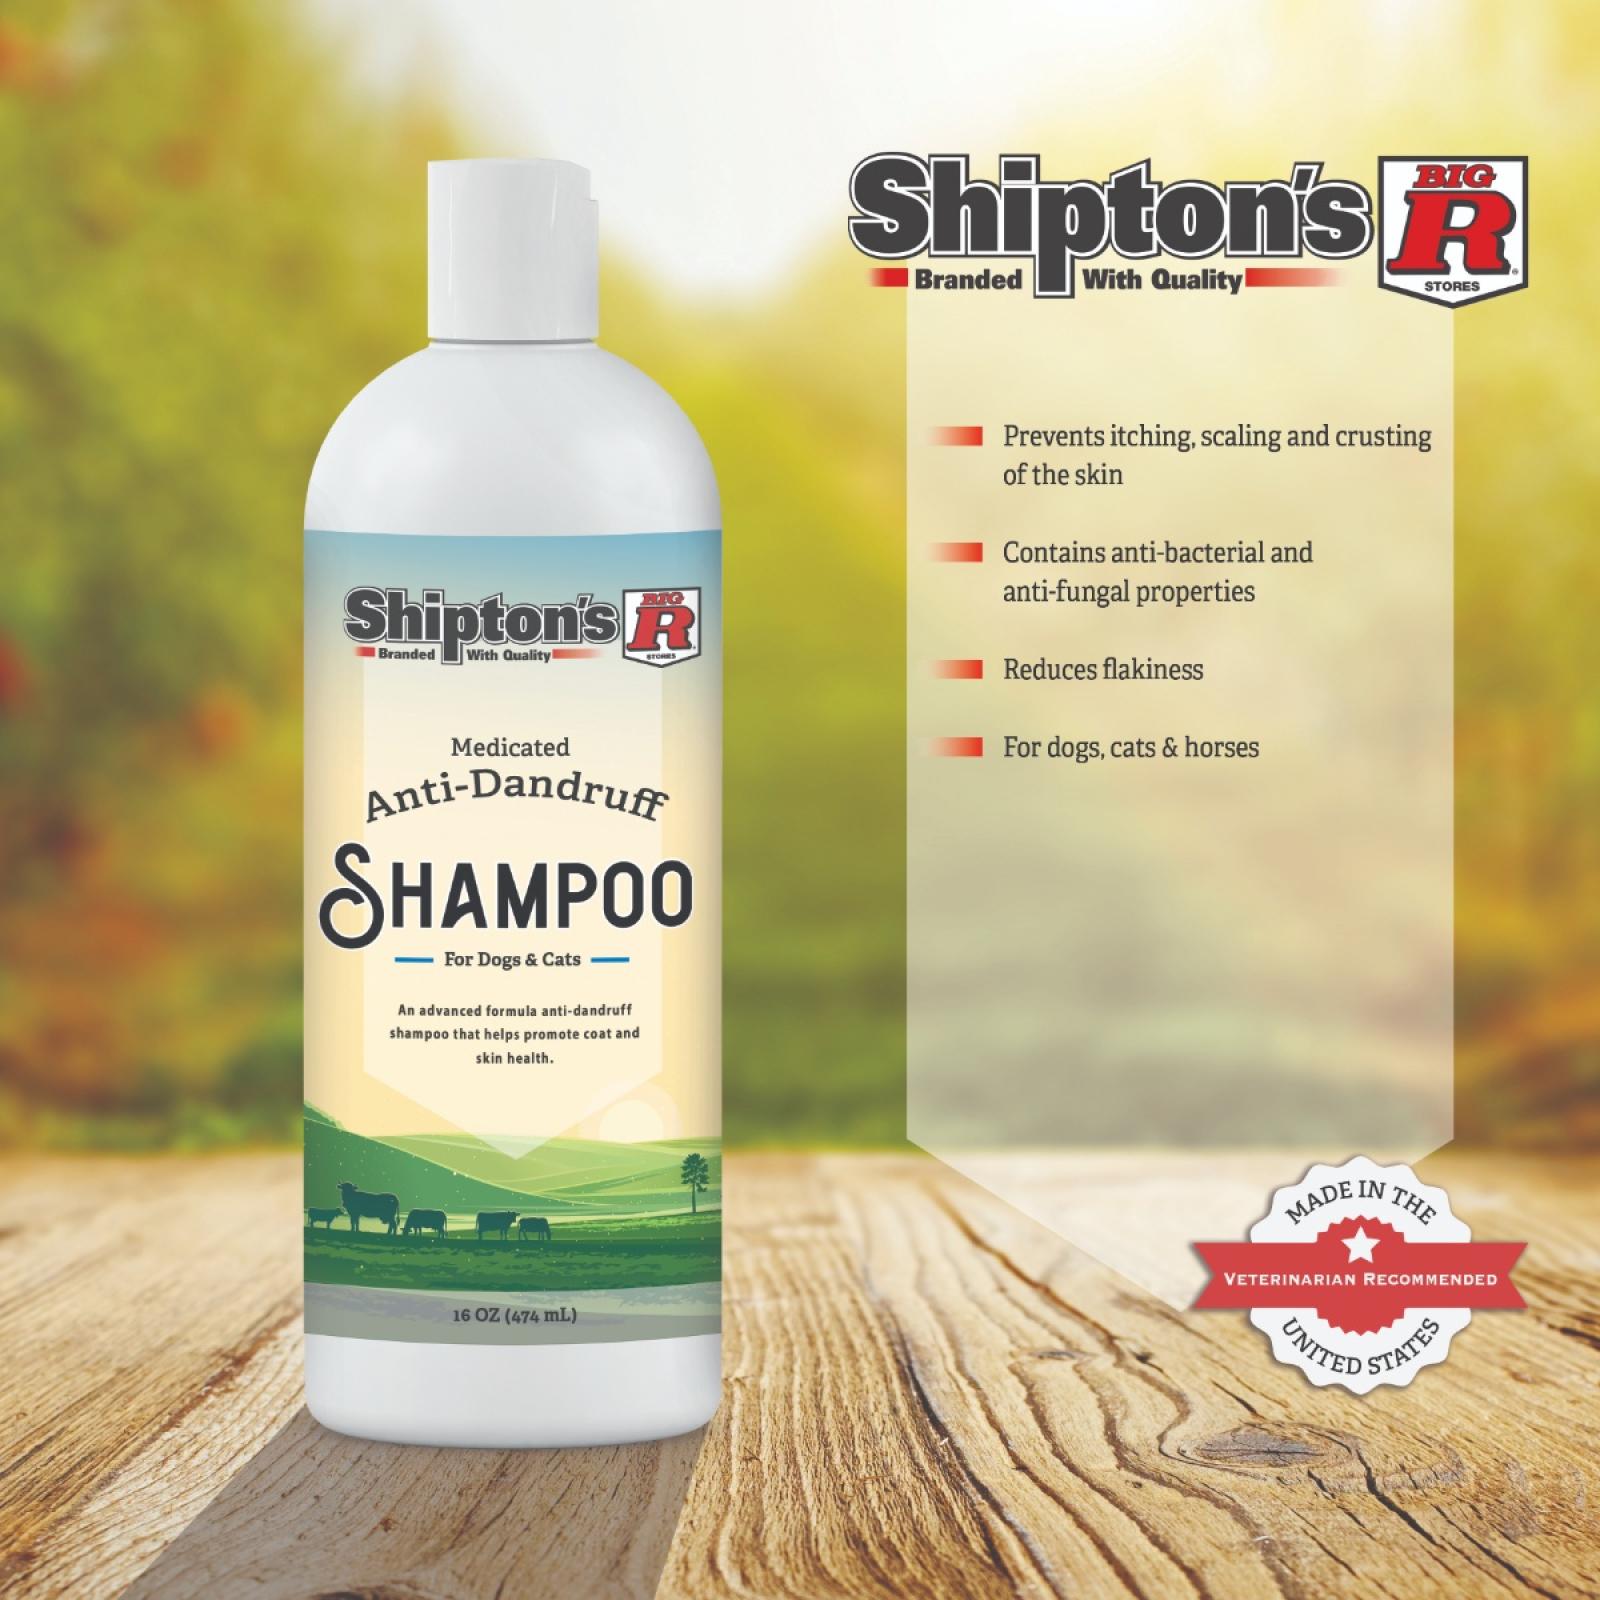 Big R Medicated Anti-Dandruff Shampoo